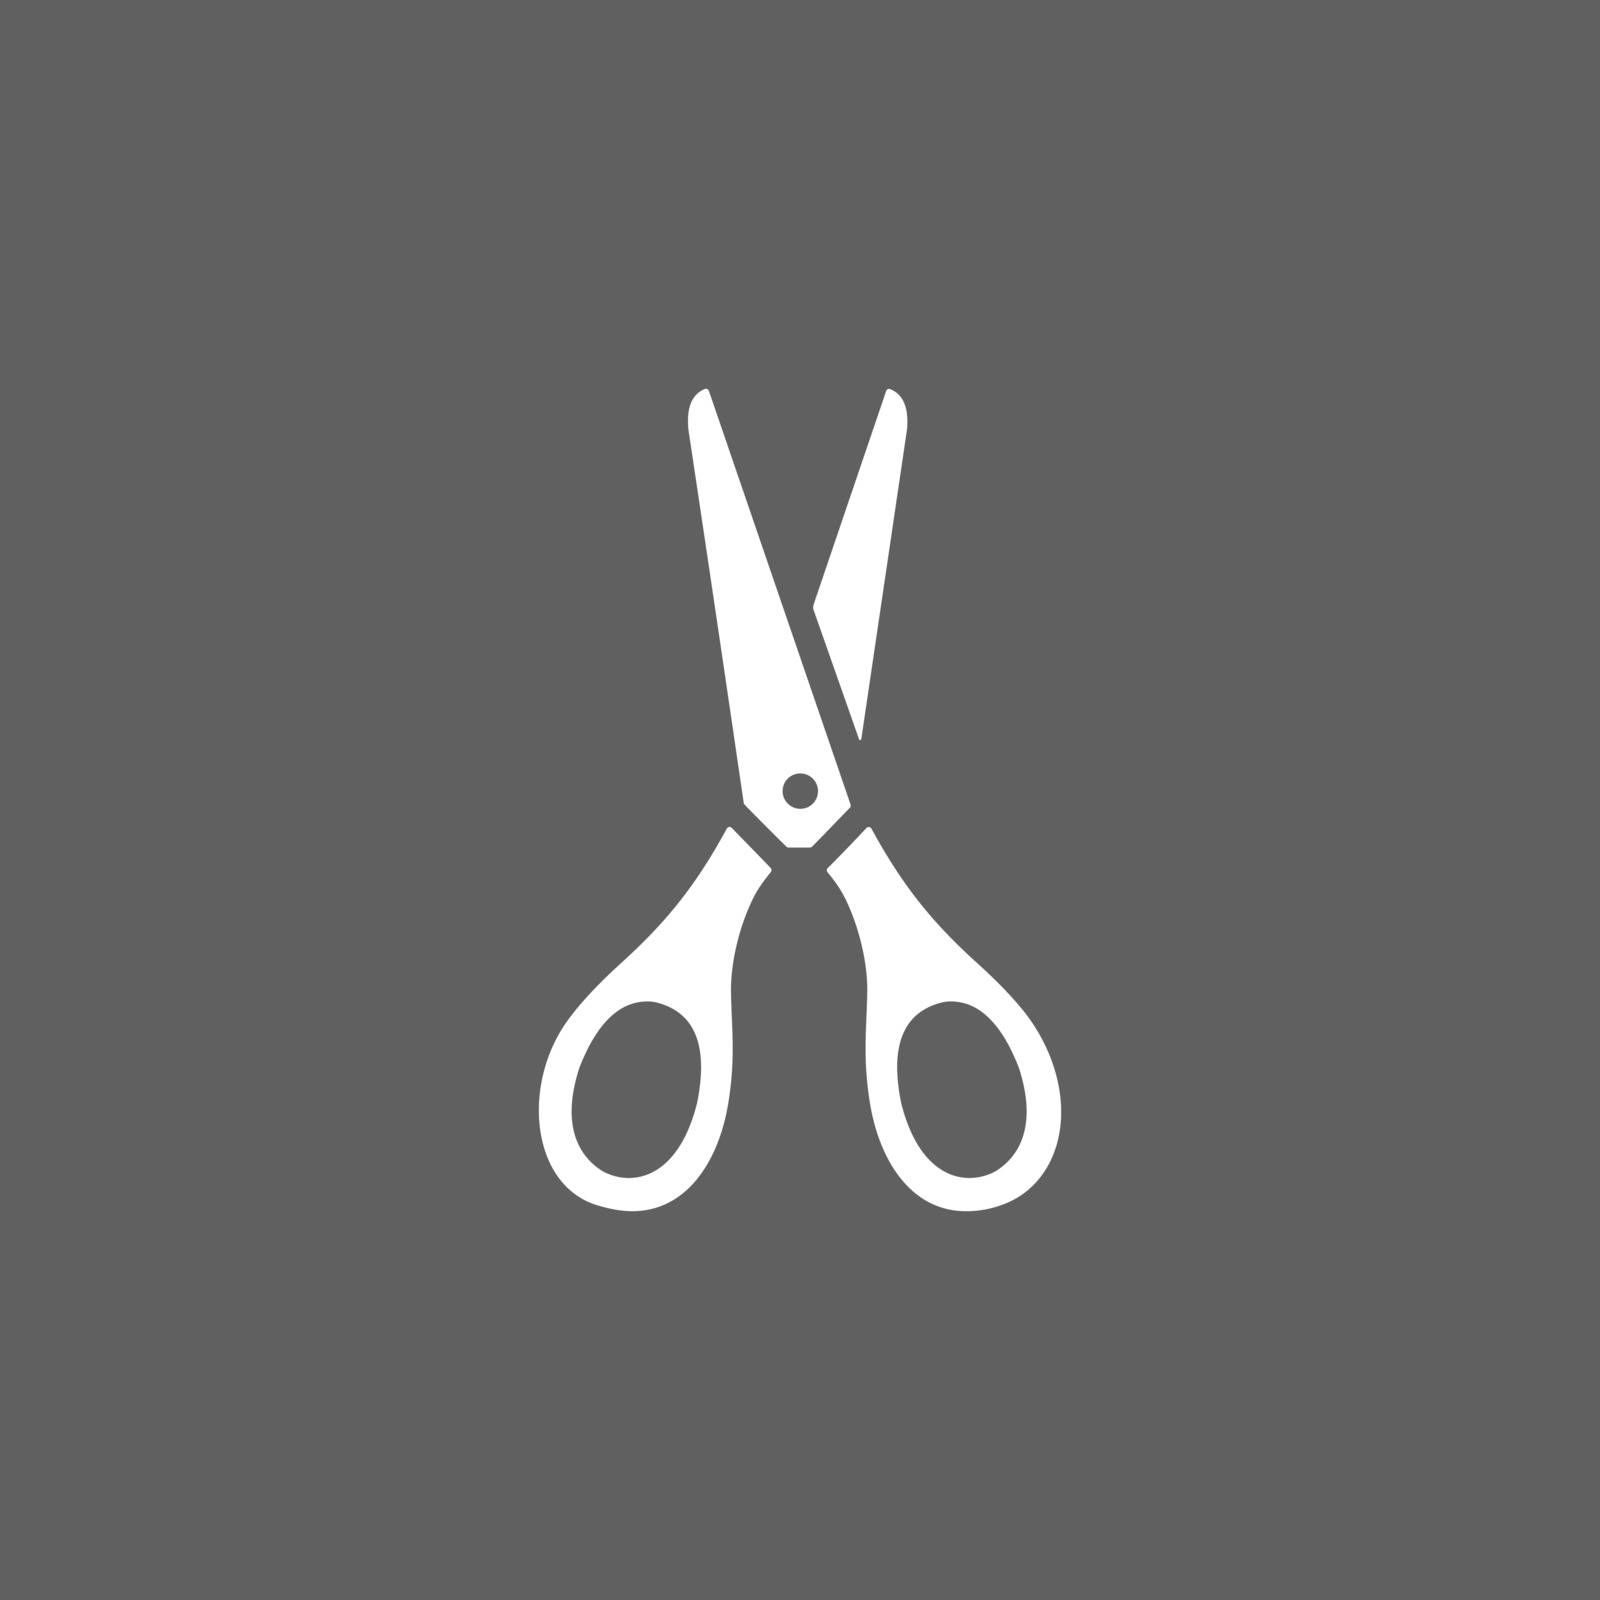 Scissors icon on a dark background